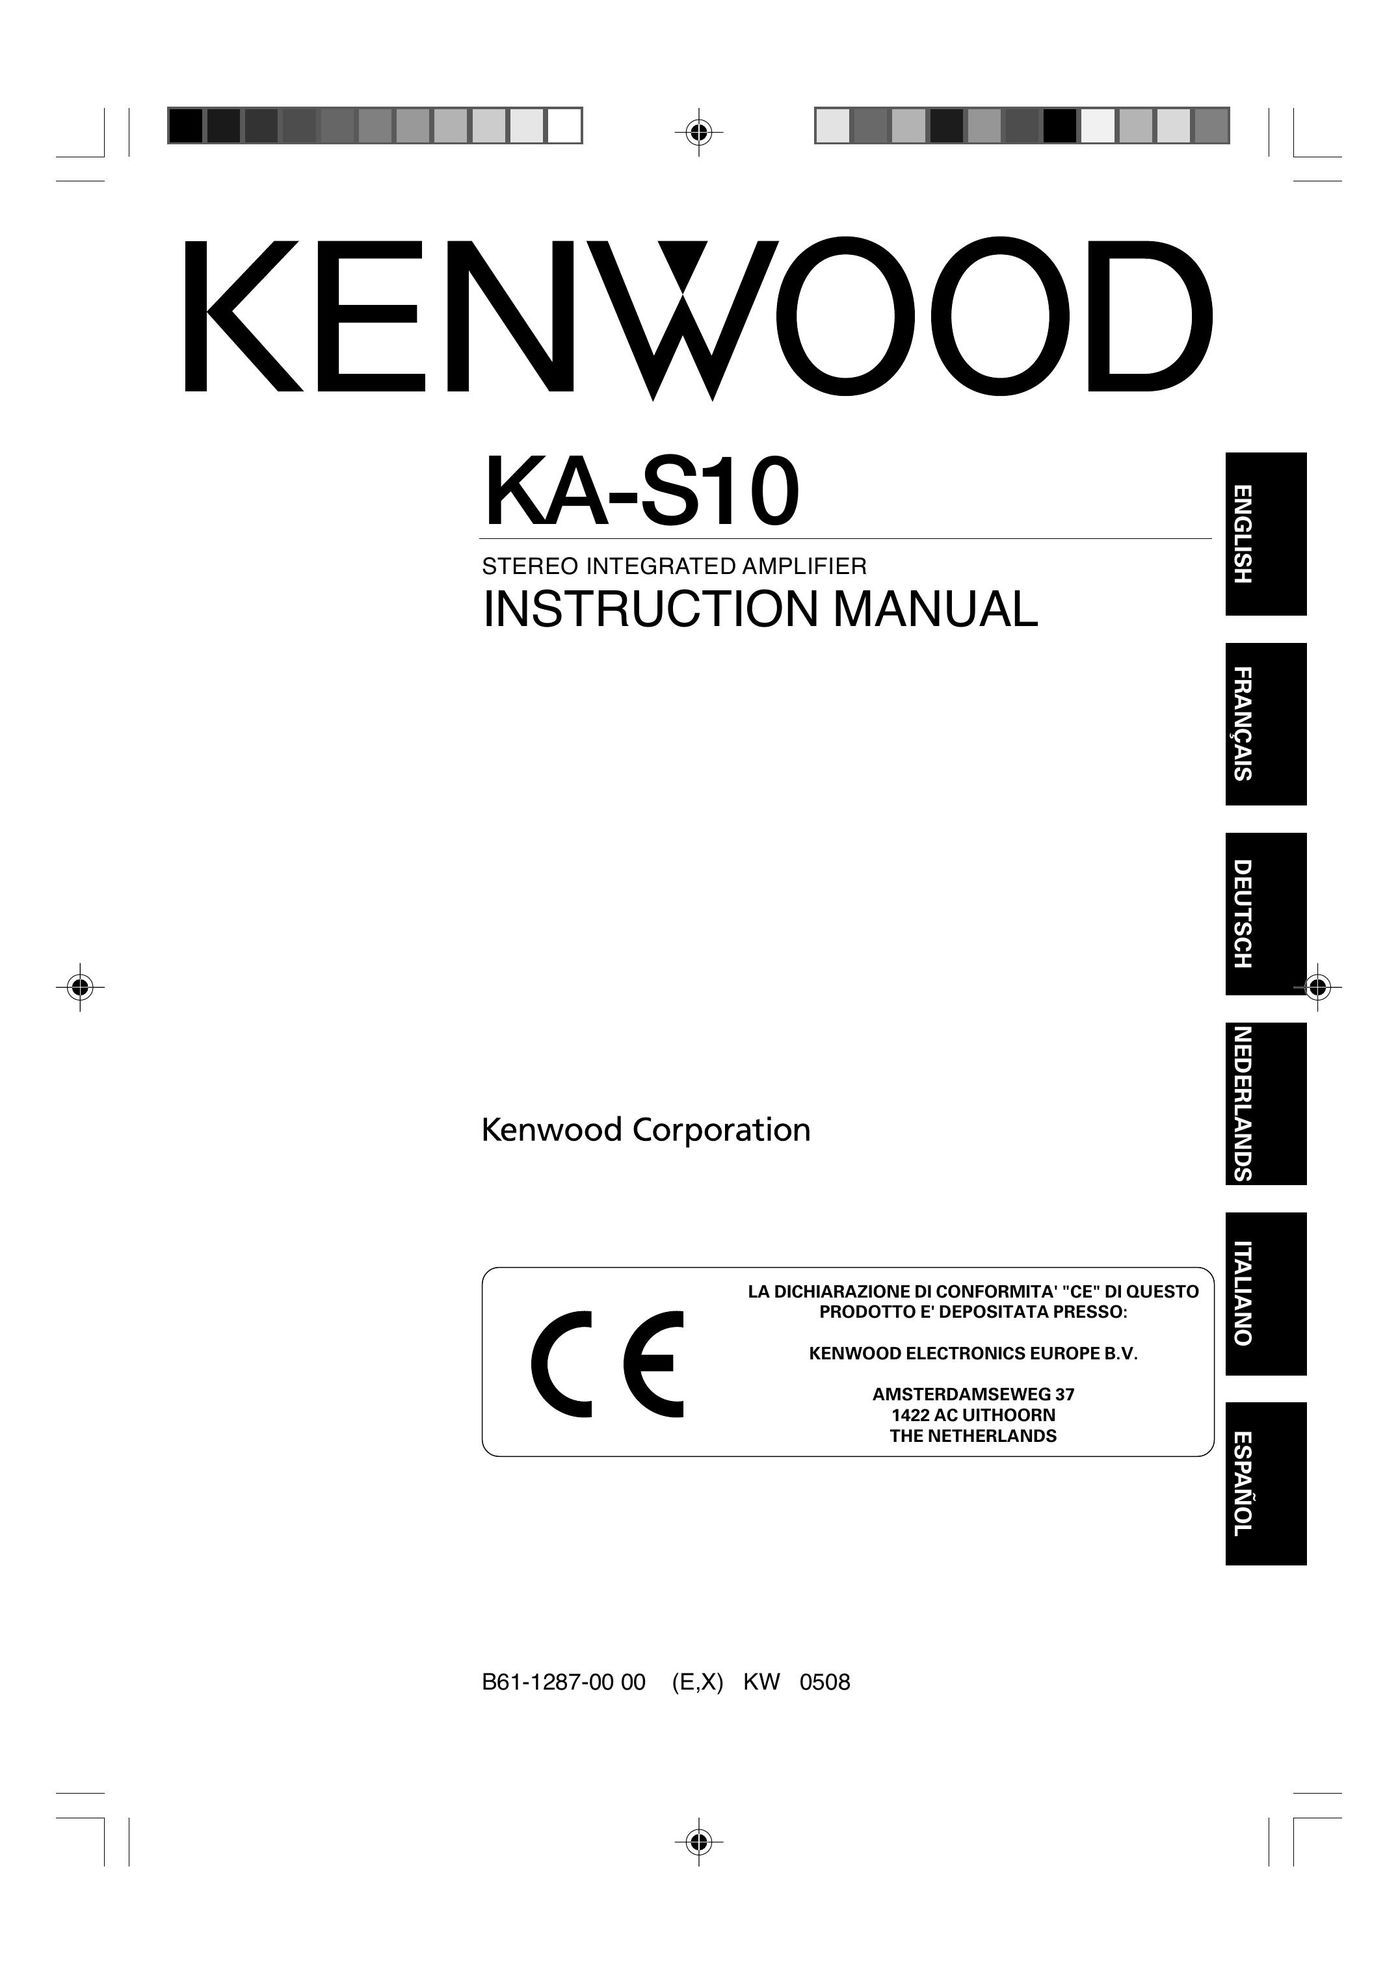 Kenwood KA-S10 Stereo Amplifier User Manual